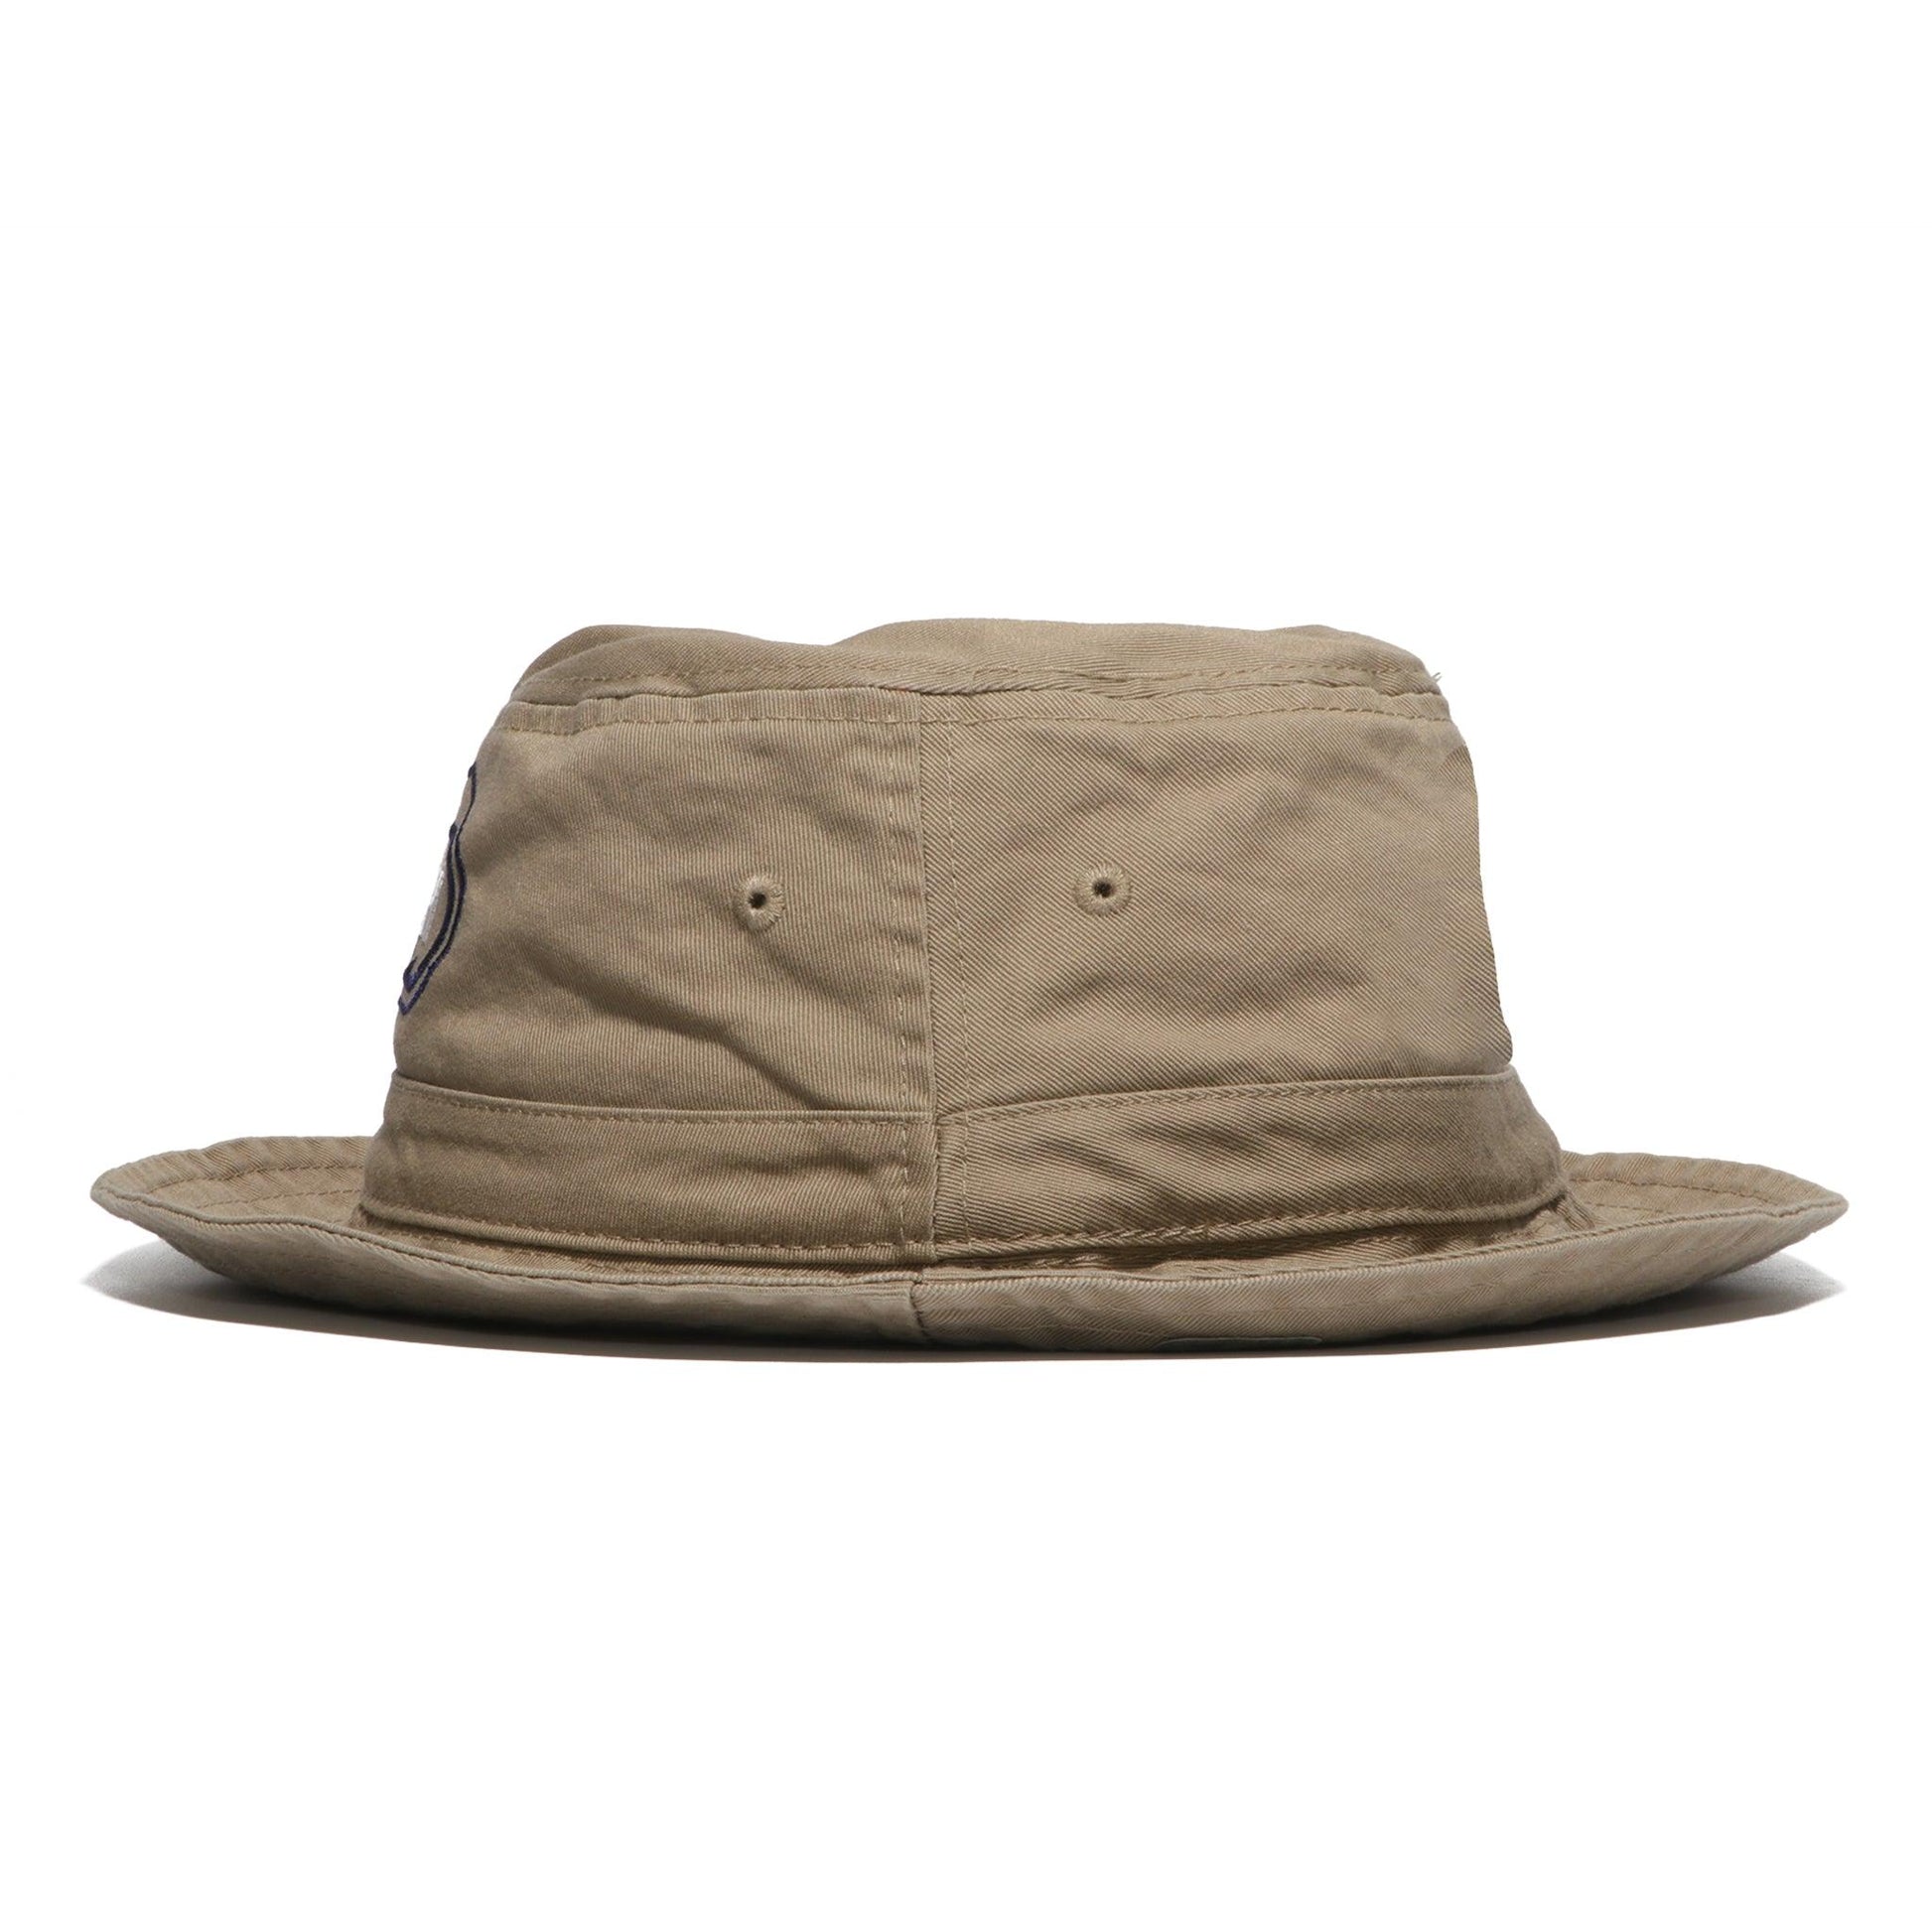 Side view of tan bucket hat